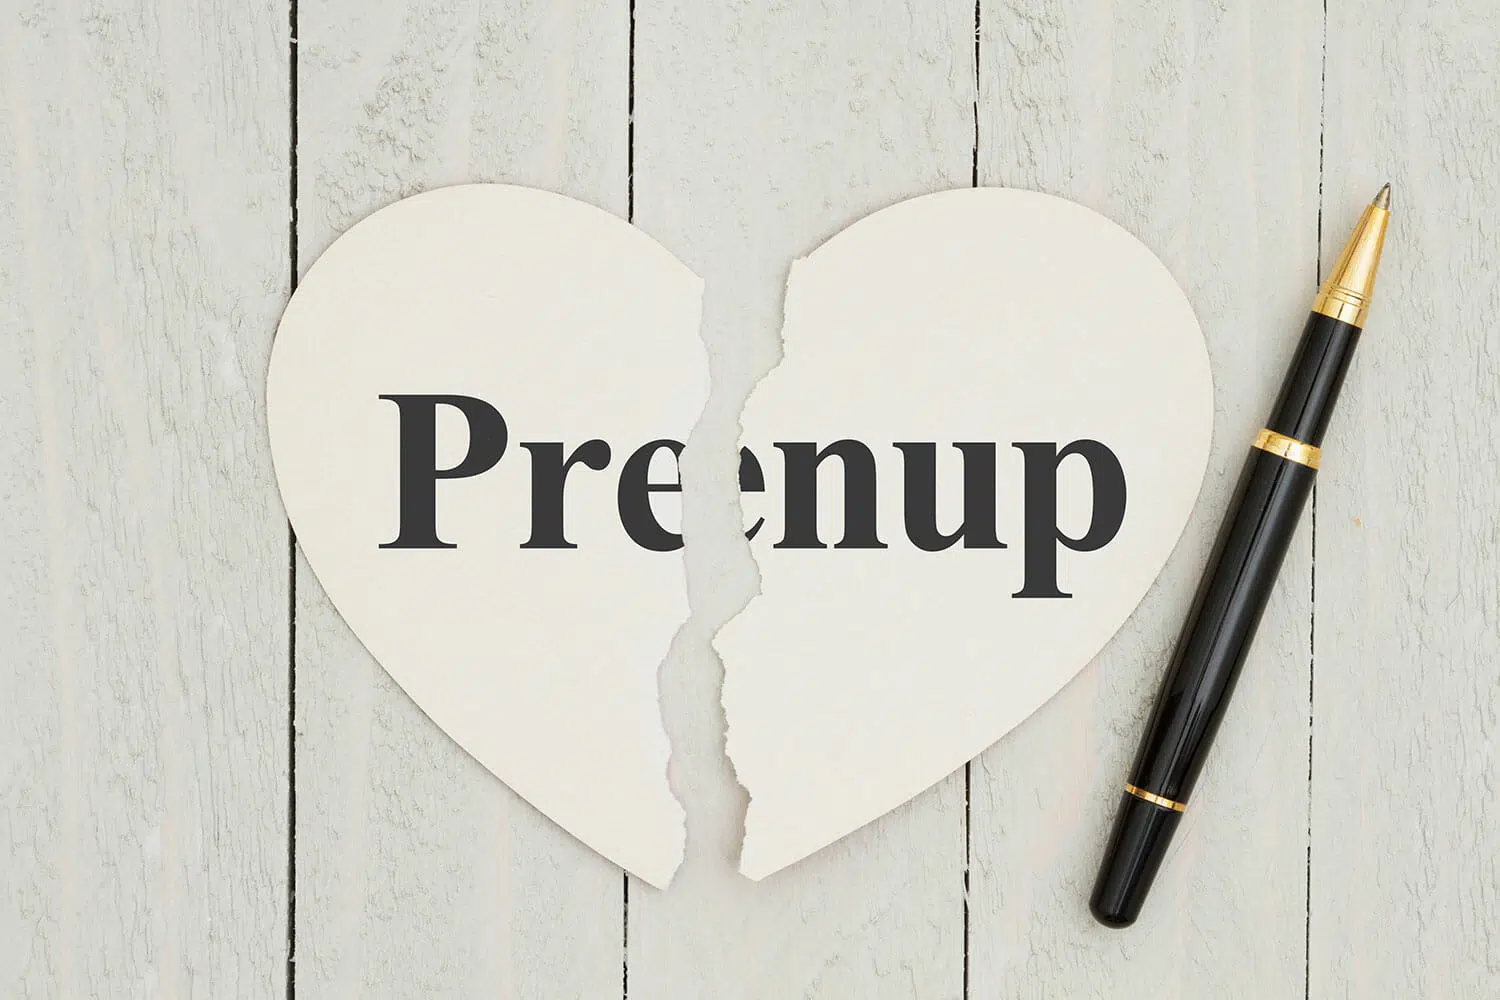 what makes a prenup invalid?